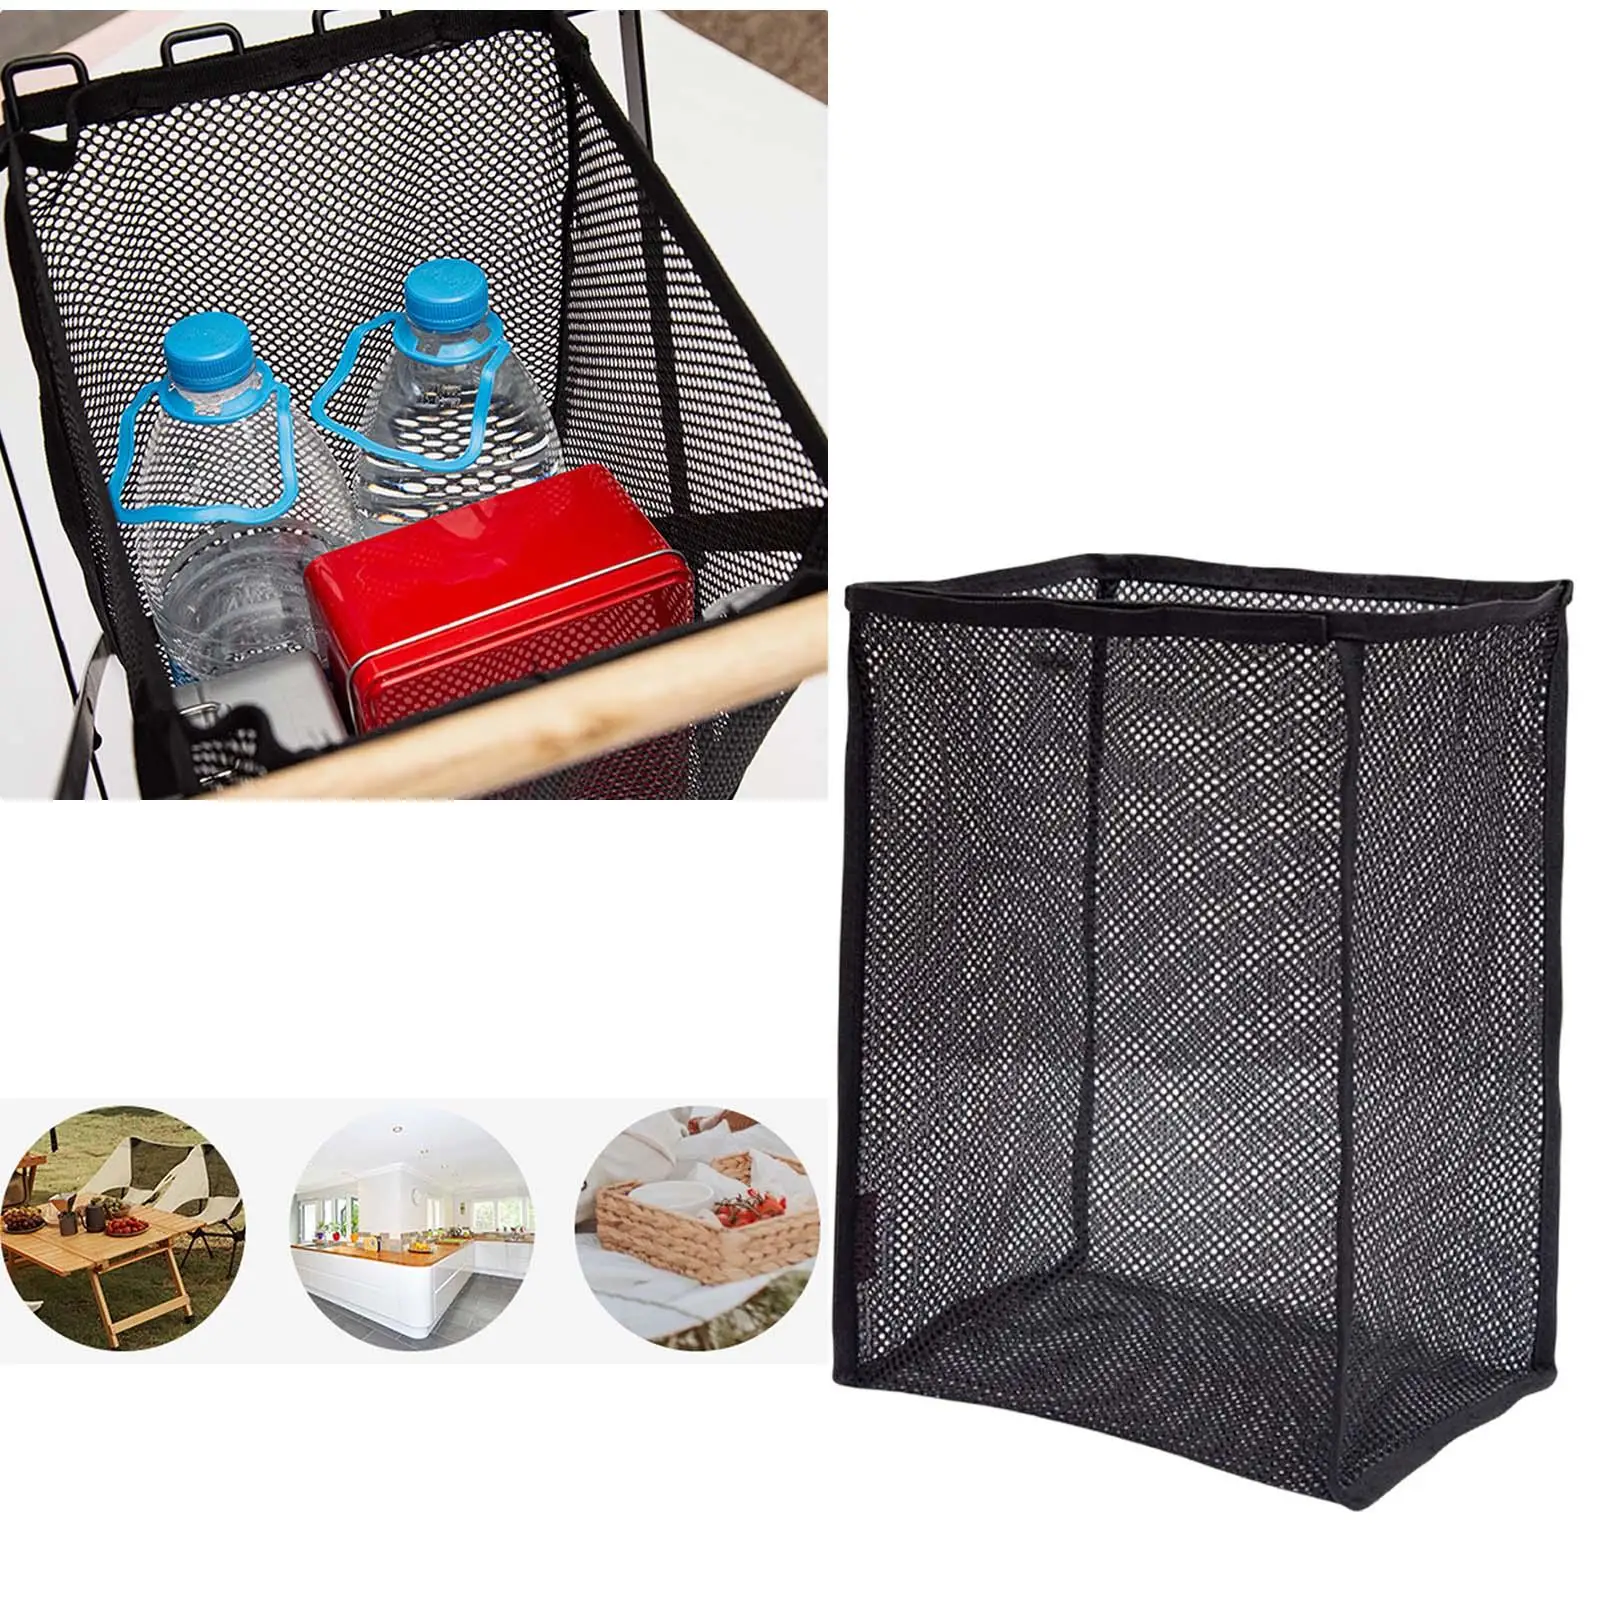 Portable Mesh Laundry Basket Wash Bag Organizer Multifunctional Hamper for Travel